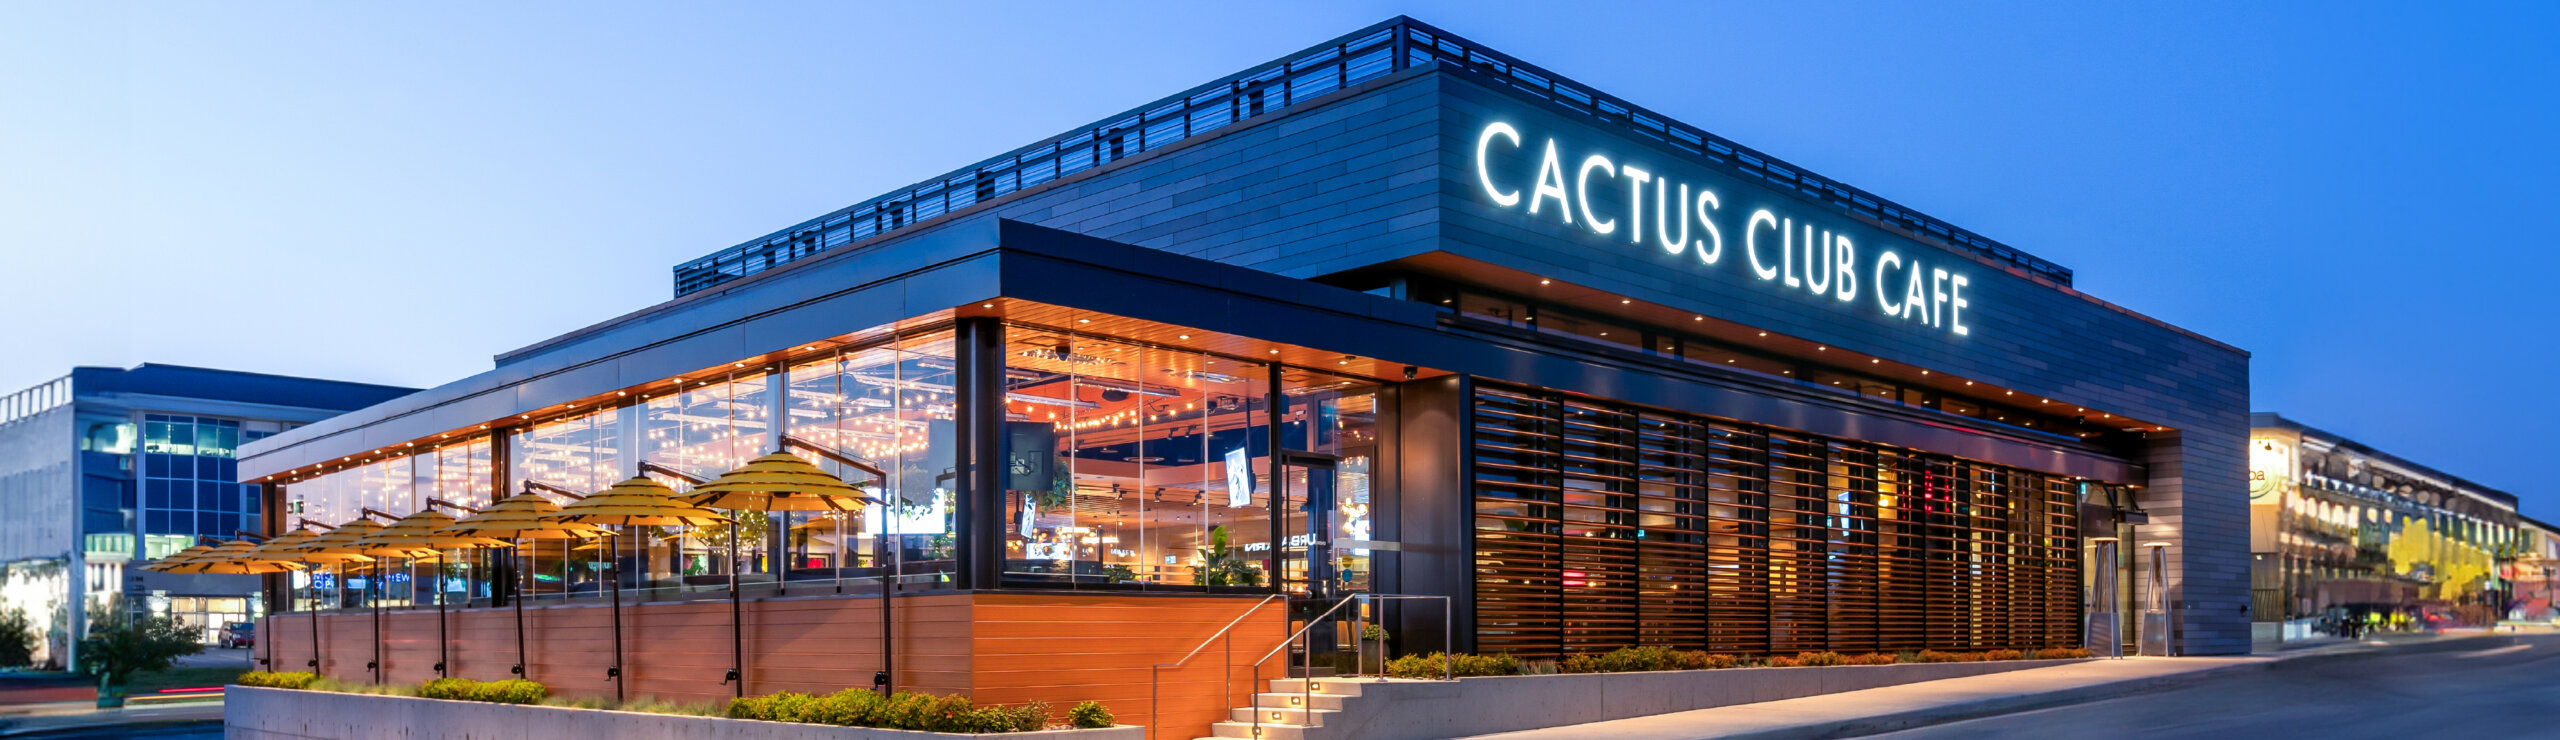 Crowfoot Restaurant  Cactus Club Cafe Calgary